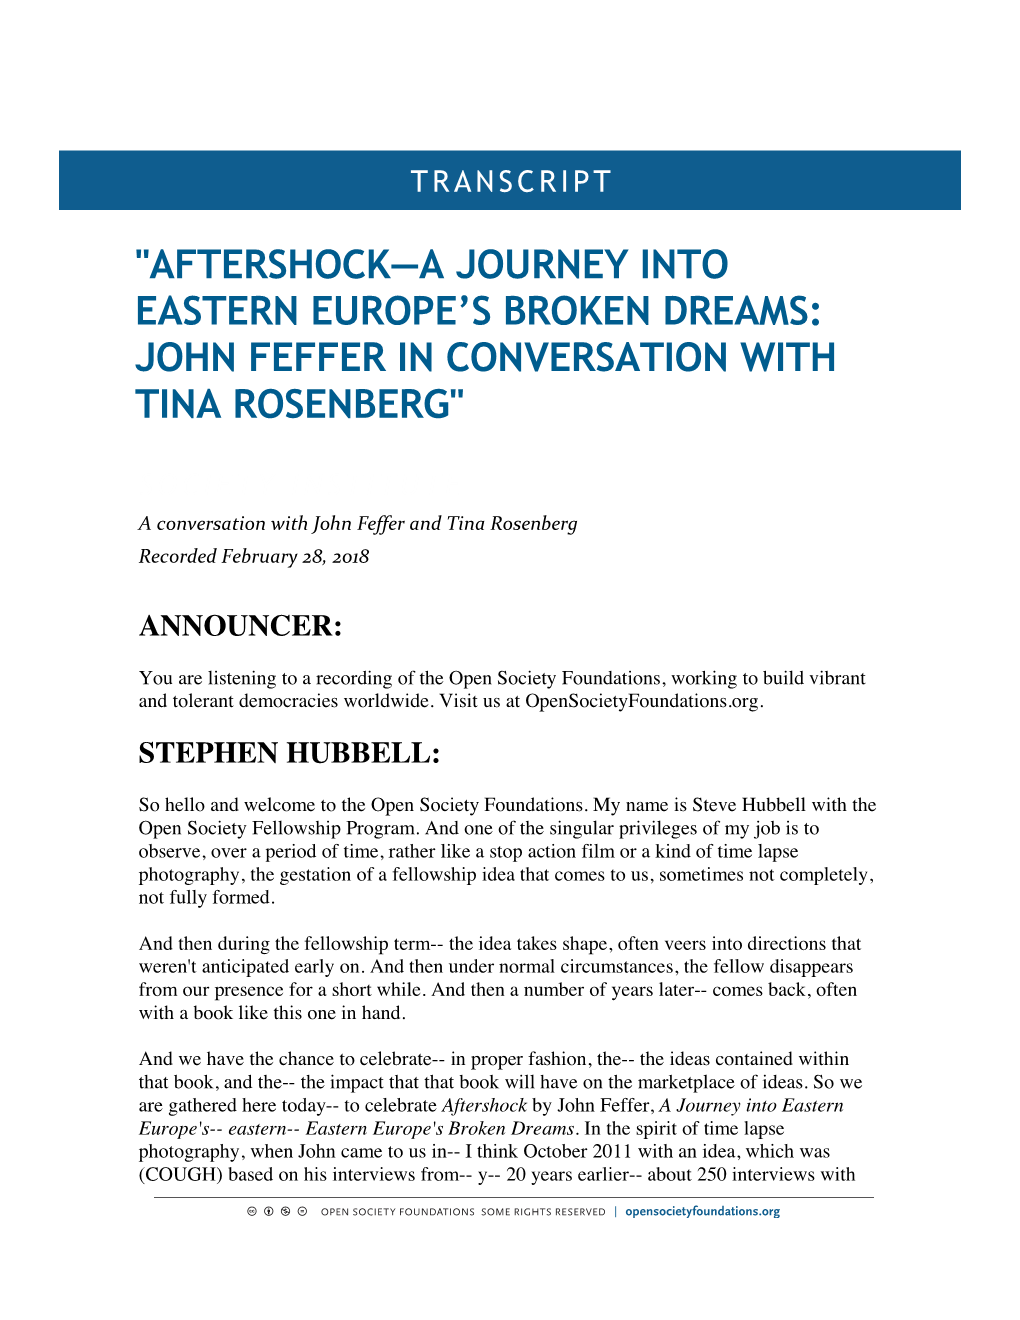 Aftershock—A Journey Into Eastern Europe's Broken Dreams: John Feffer in Conversation with Tina Rosenberg